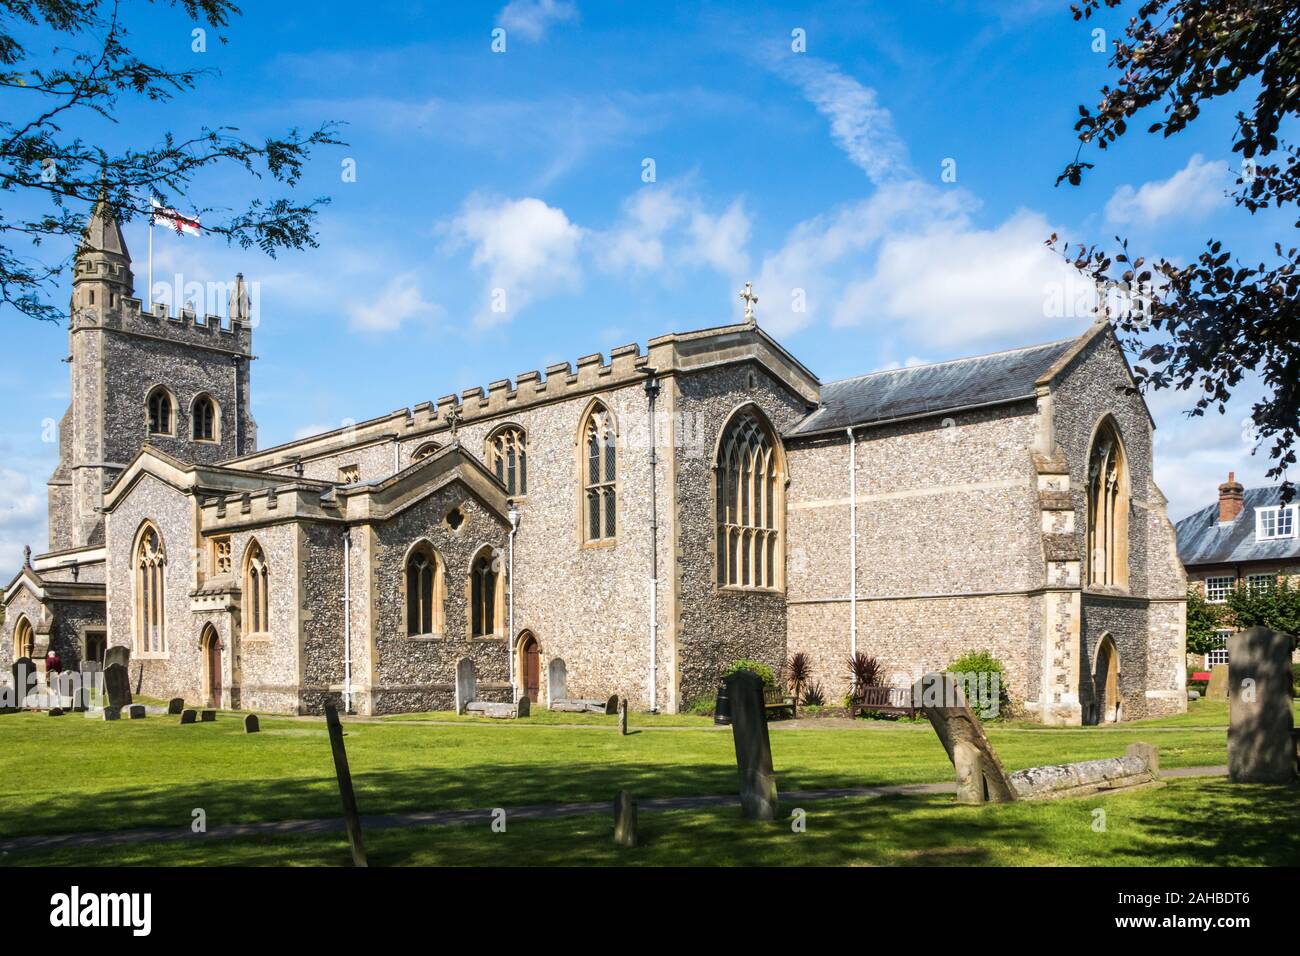 St Mary's Parish Church, Old Amersham, Buckinghamshire, England, UK Banque D'Images